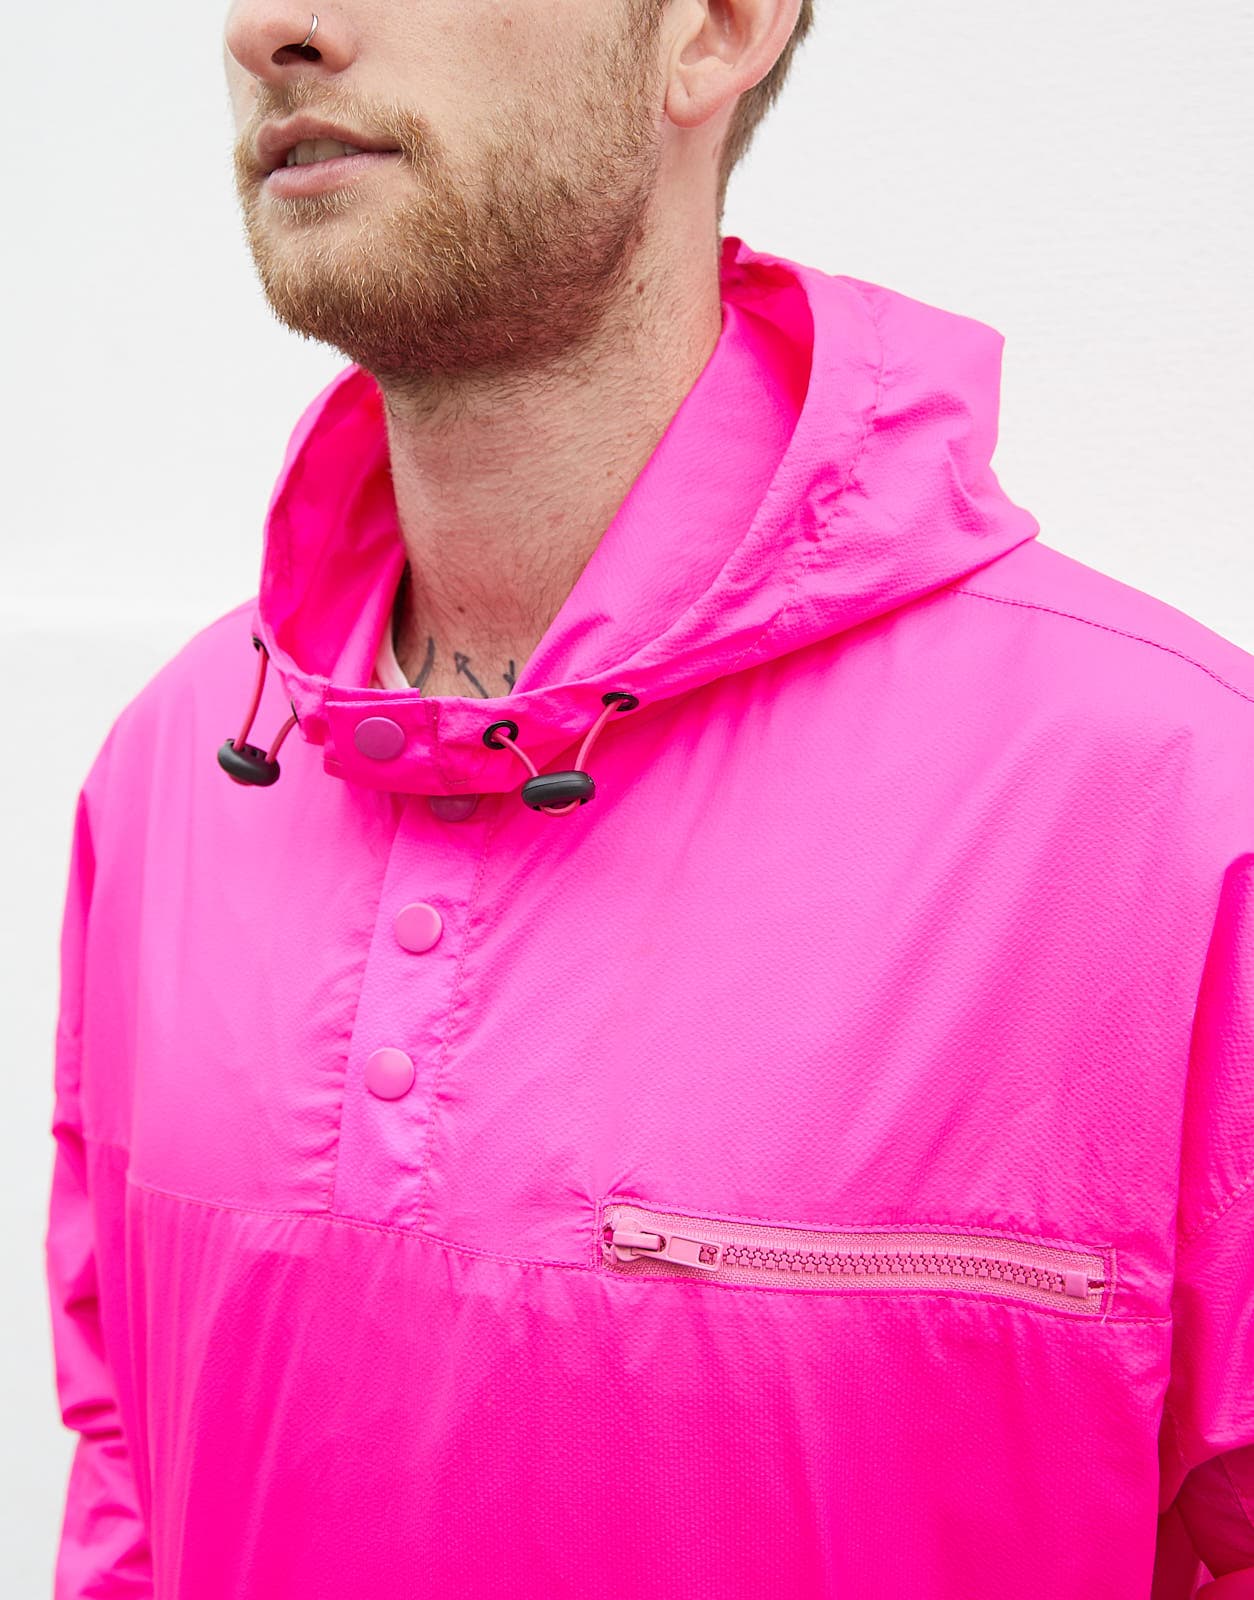 ASOS artworker Tom in pink